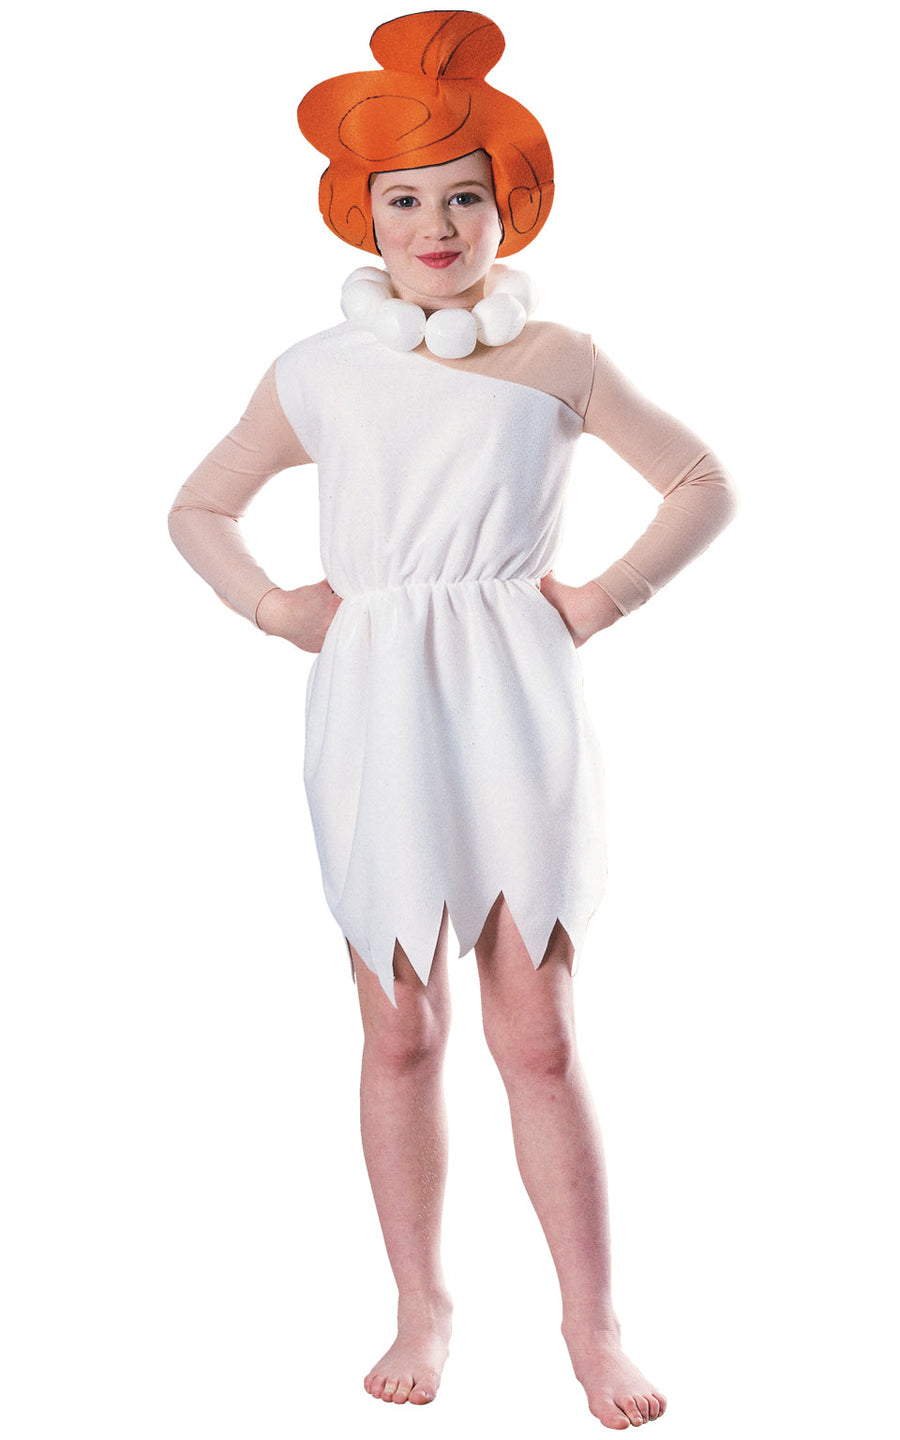 Wilma Flintstone Deluxe Costume Child Girls White Hanna Barbera_1